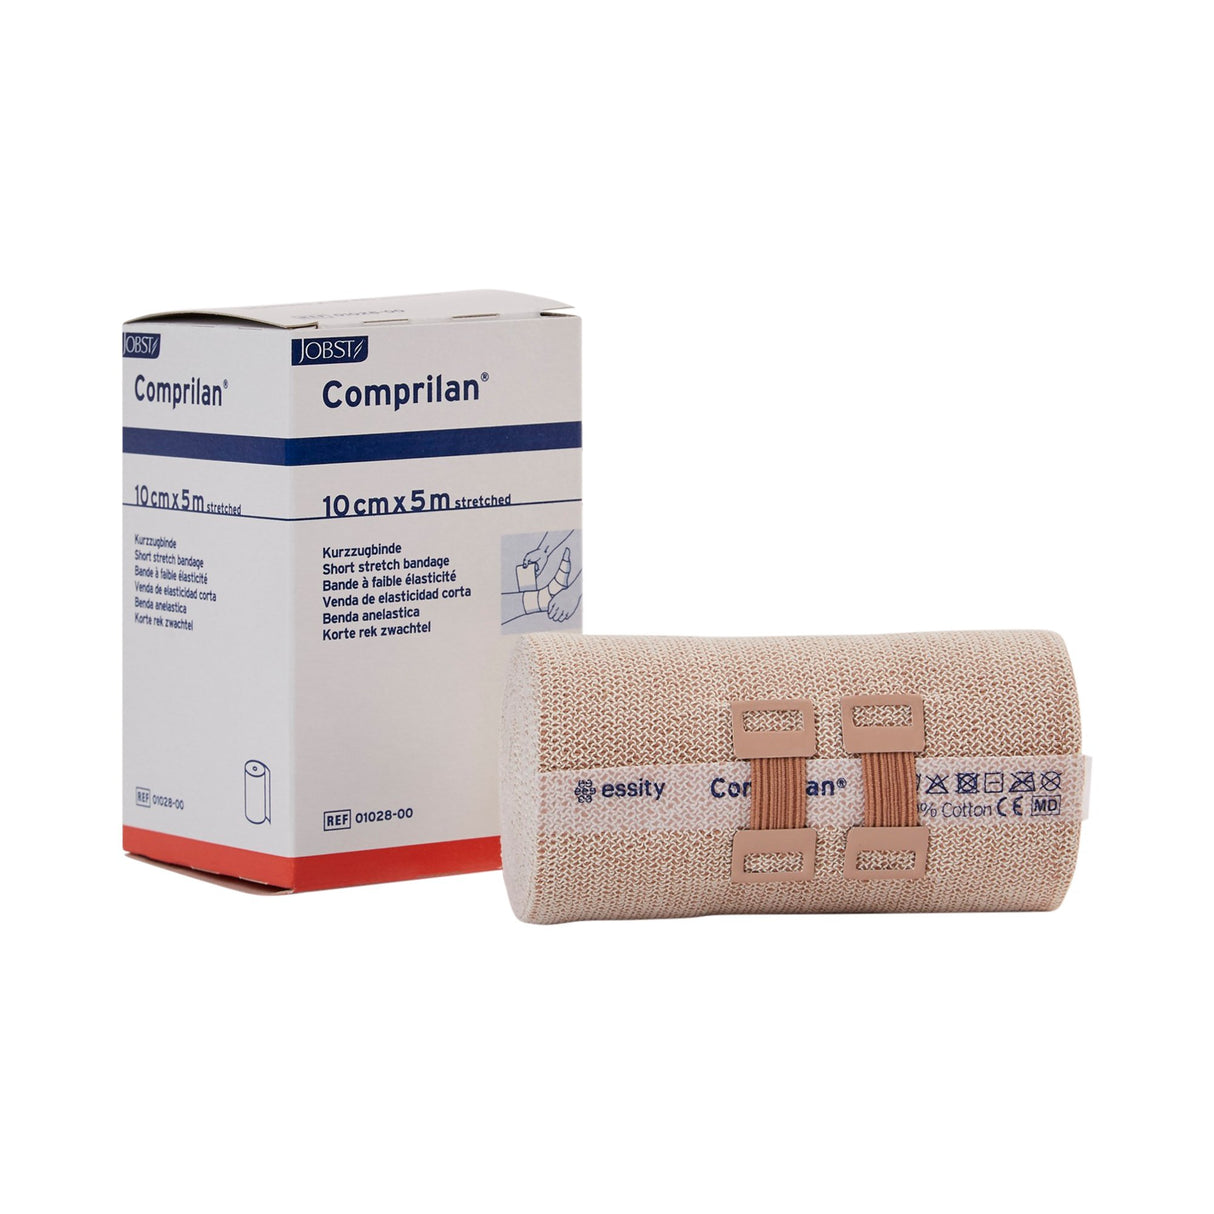 Comprilan® Clip Detached Closure Compression Bandage, 4 Inch x 5-1/2 Yard